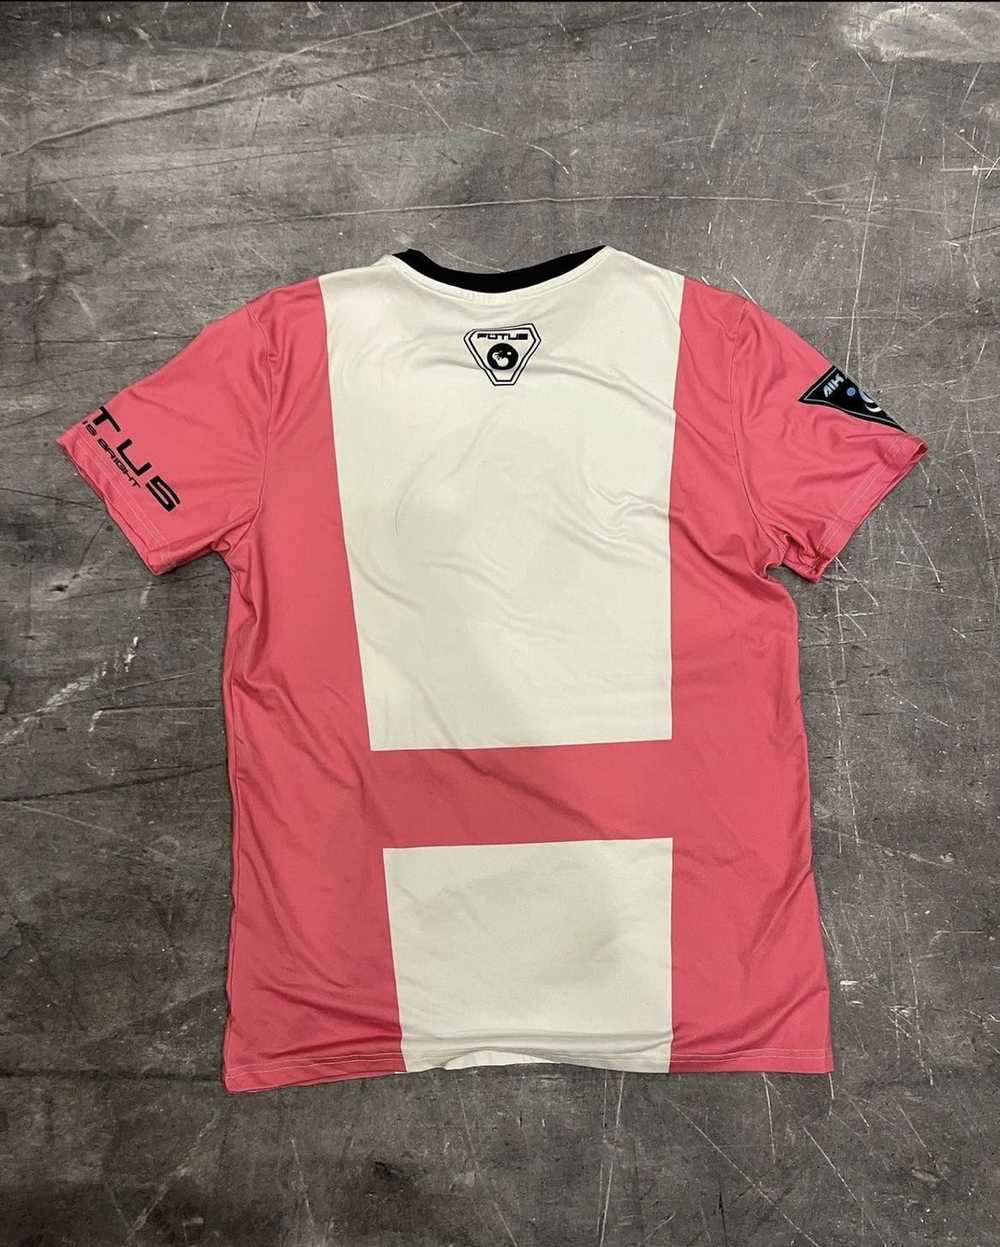 Beauty Beast fotus pink jersey - image 2